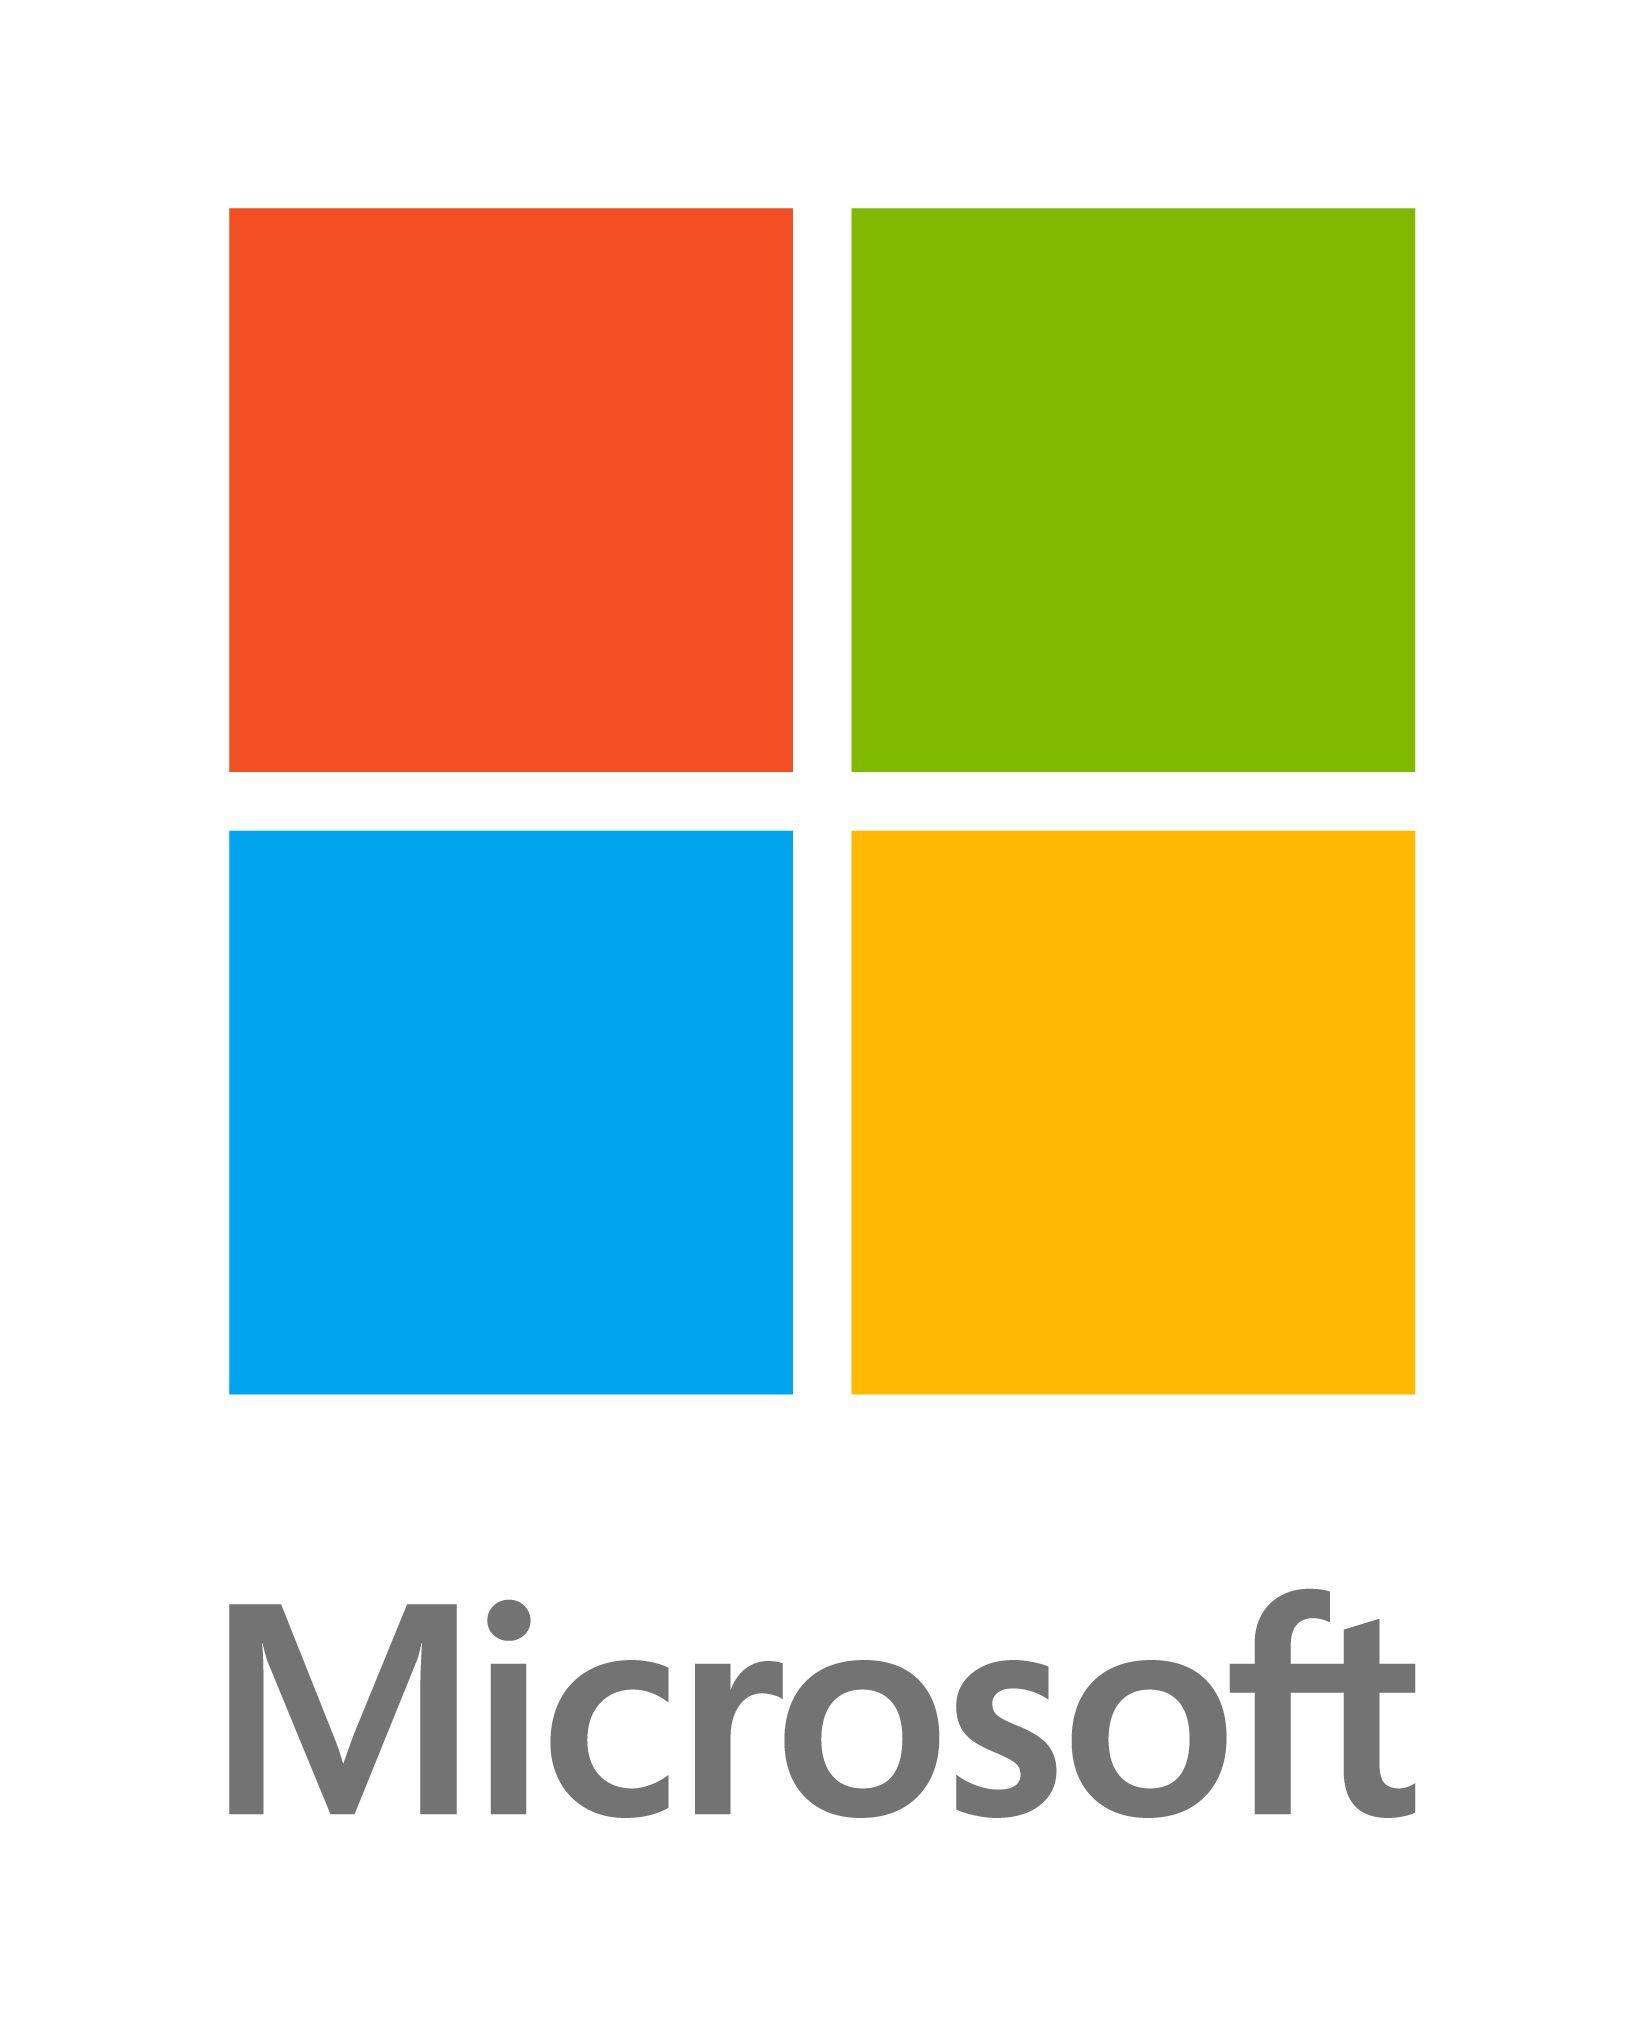 American Computer Technology Company Logo - Microsoft Corporation is an American multinational technology